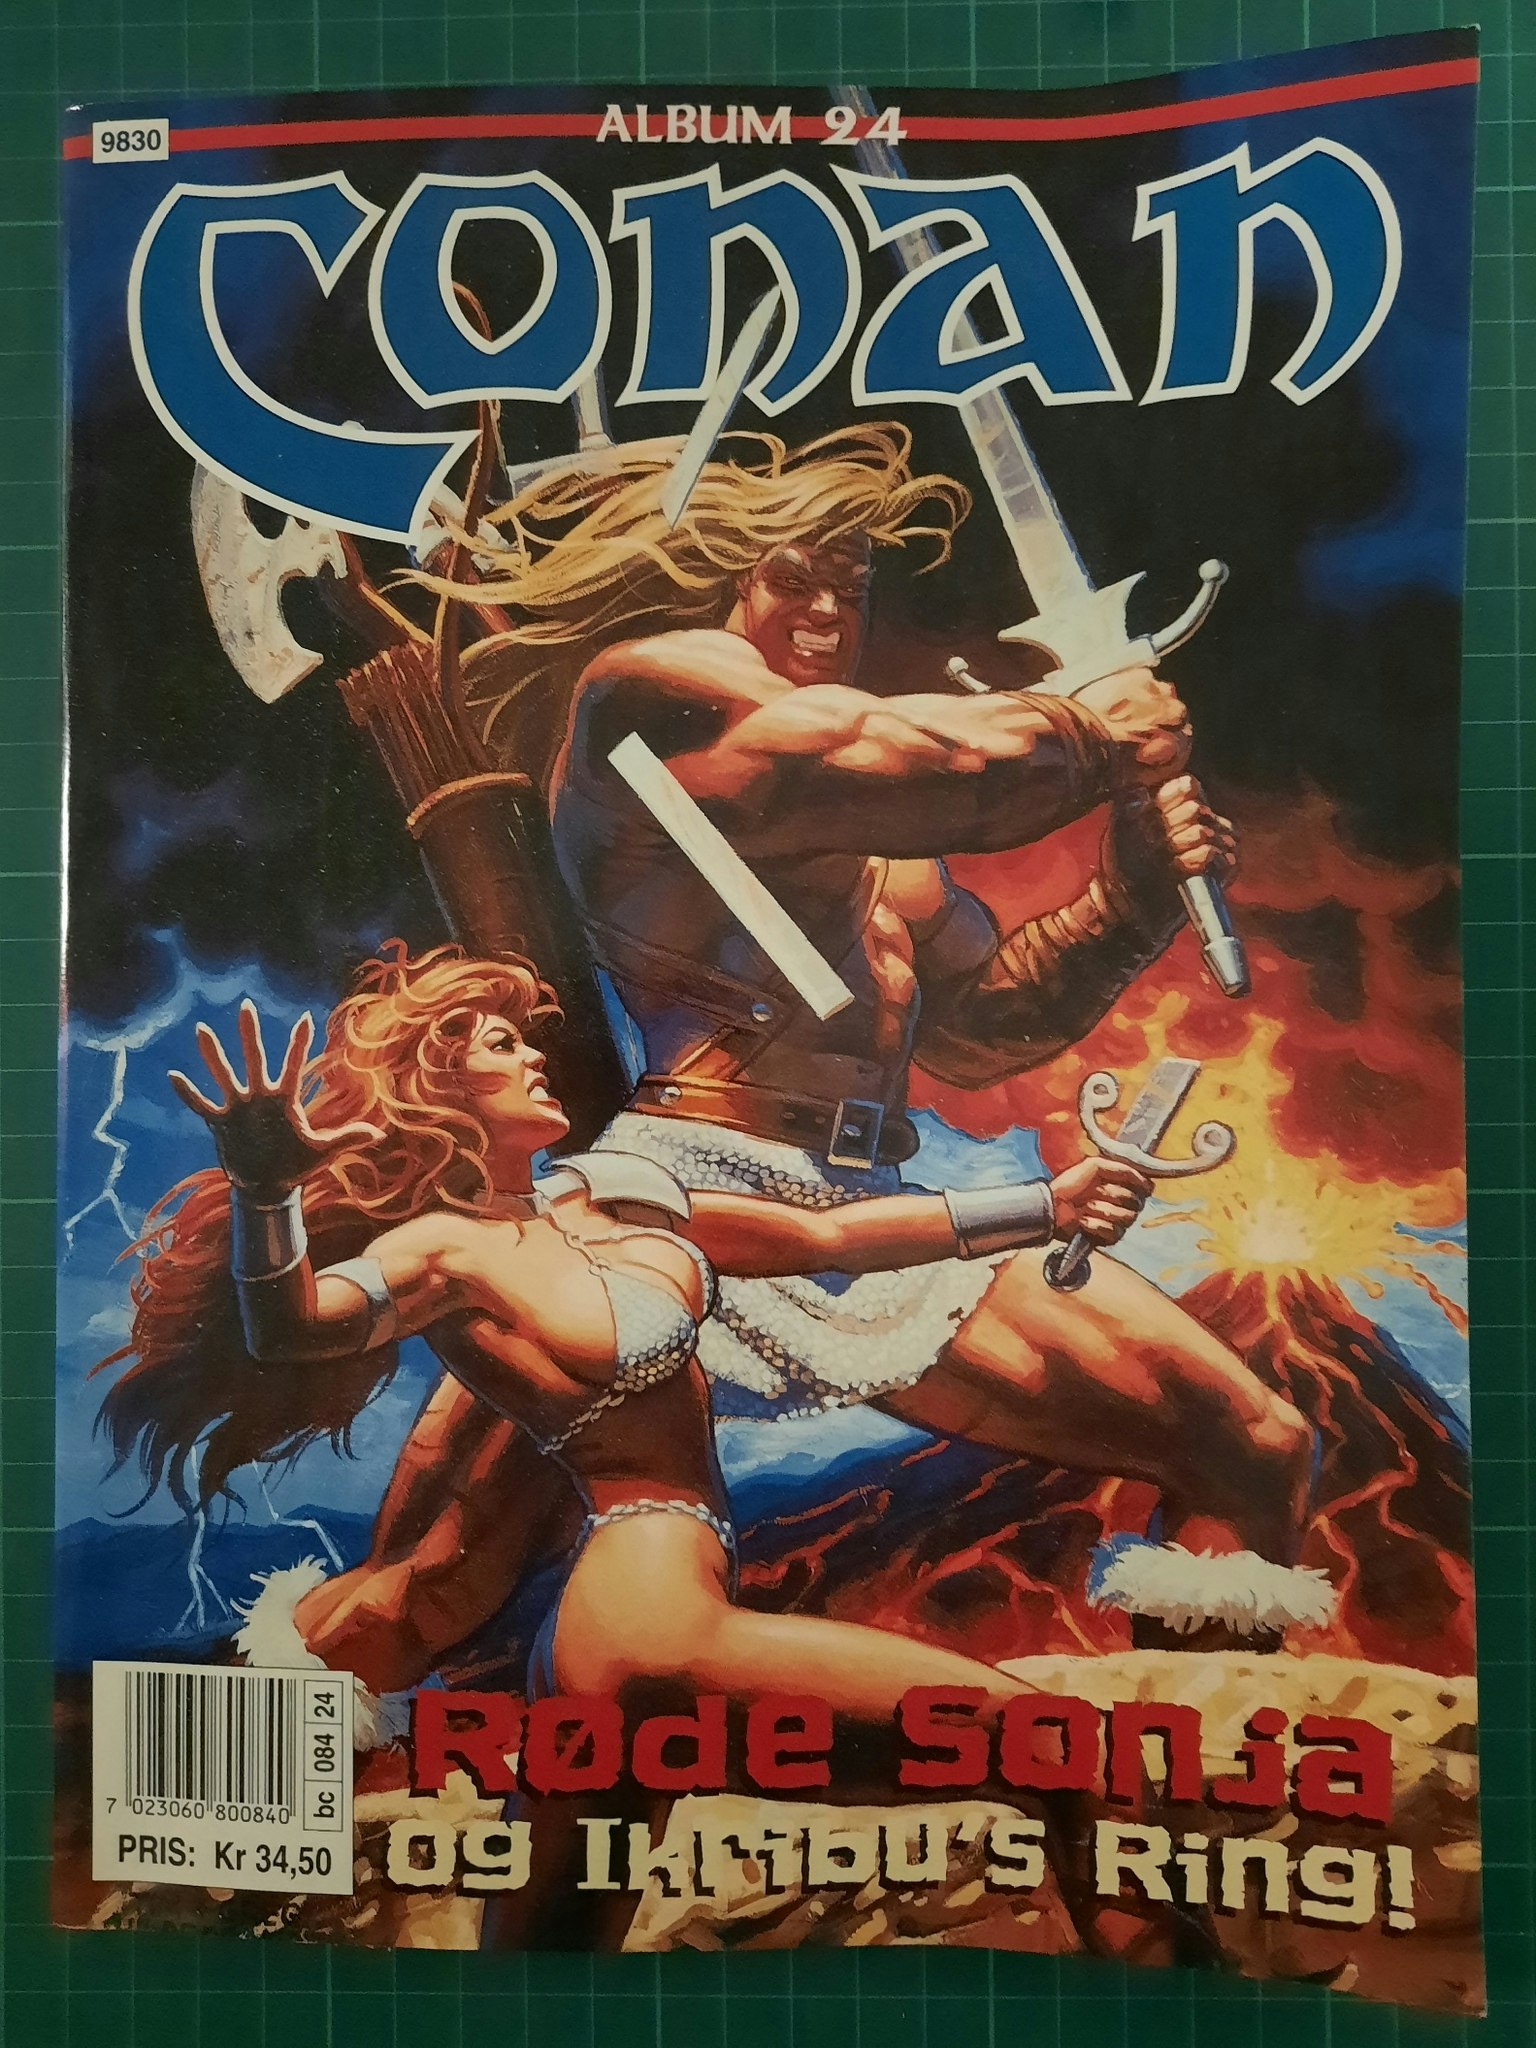 Conan album 34